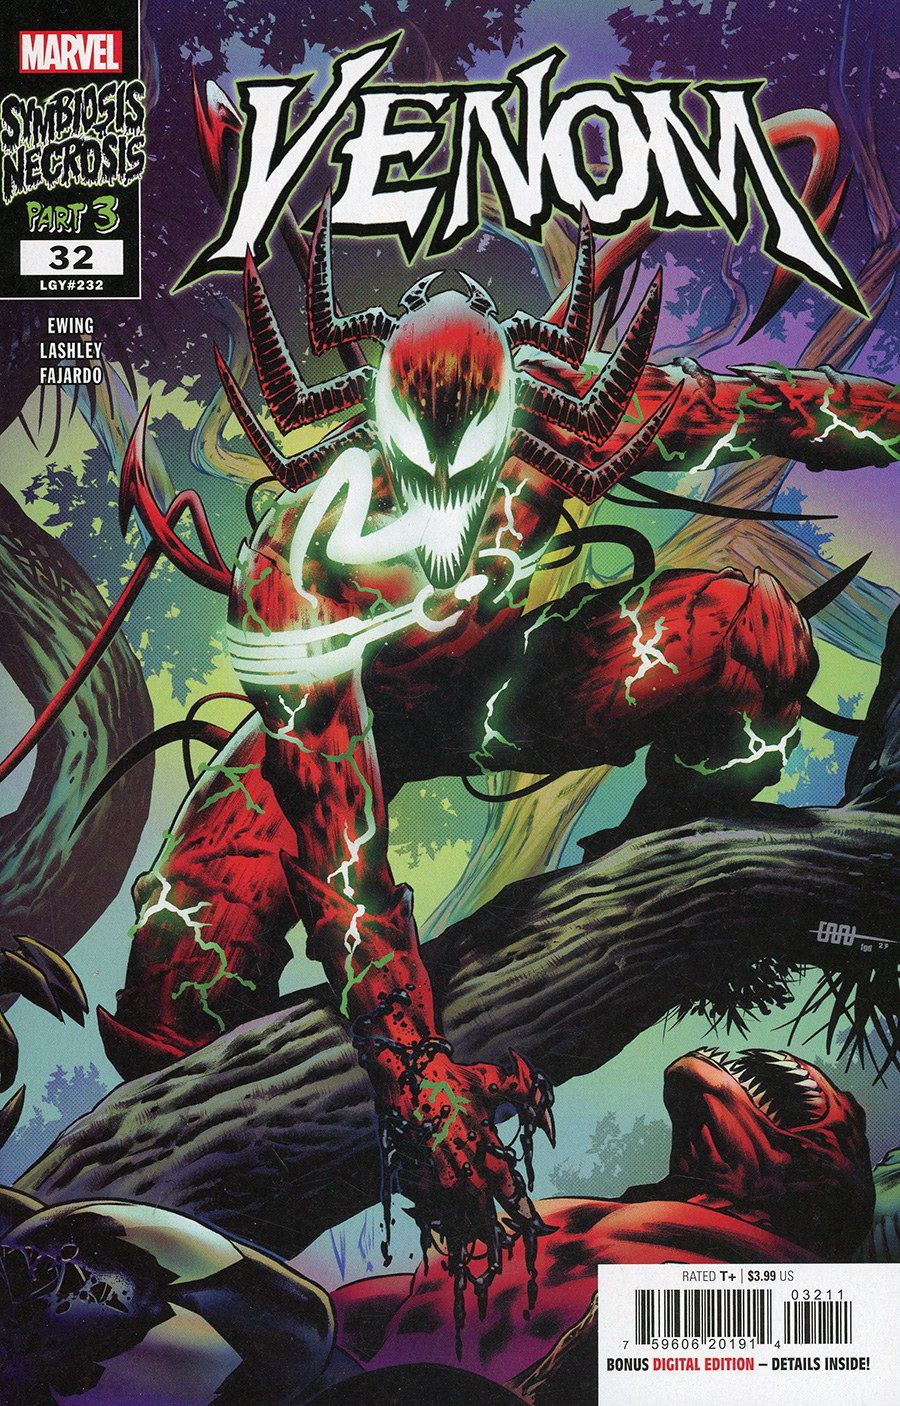 Venom Vol 5 #32 Cover A Regular CAFU Cover (Symbiosis Necrosis Part 3)